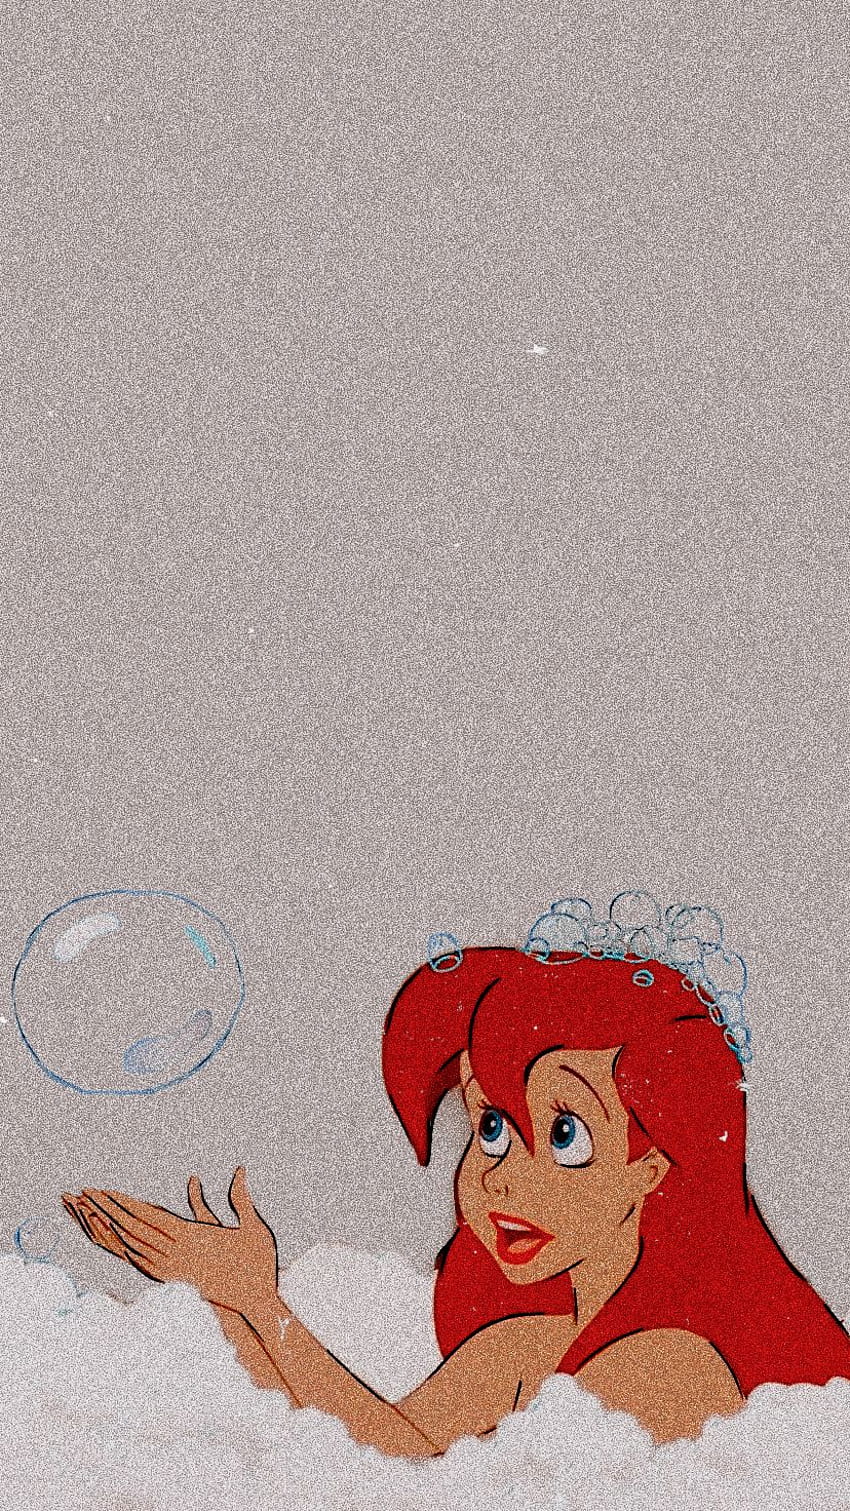 Wallpaper of ariel from the little mermaid in the bathtub - Ariel